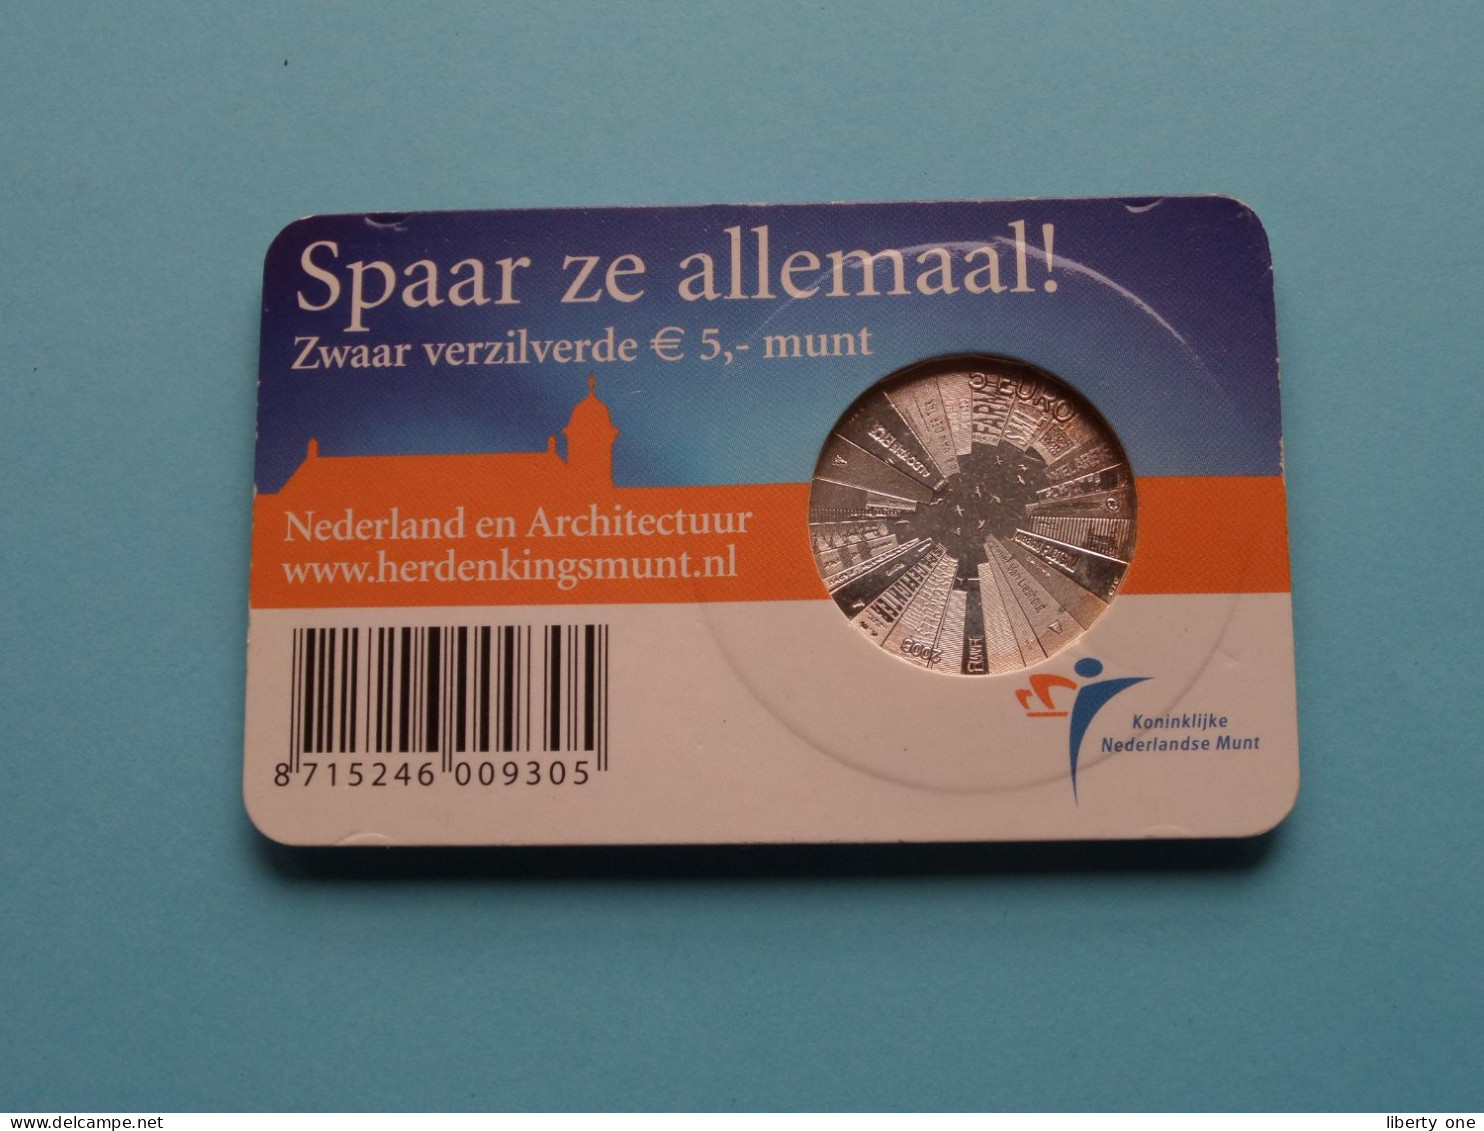 Het ARCHITECTUUR Vijfje > Officiële Herdenkingsmunt 2008 - 5 Euro ( Zie / Voir / See > DETAIL > SCANS ) ! - Pays-Bas